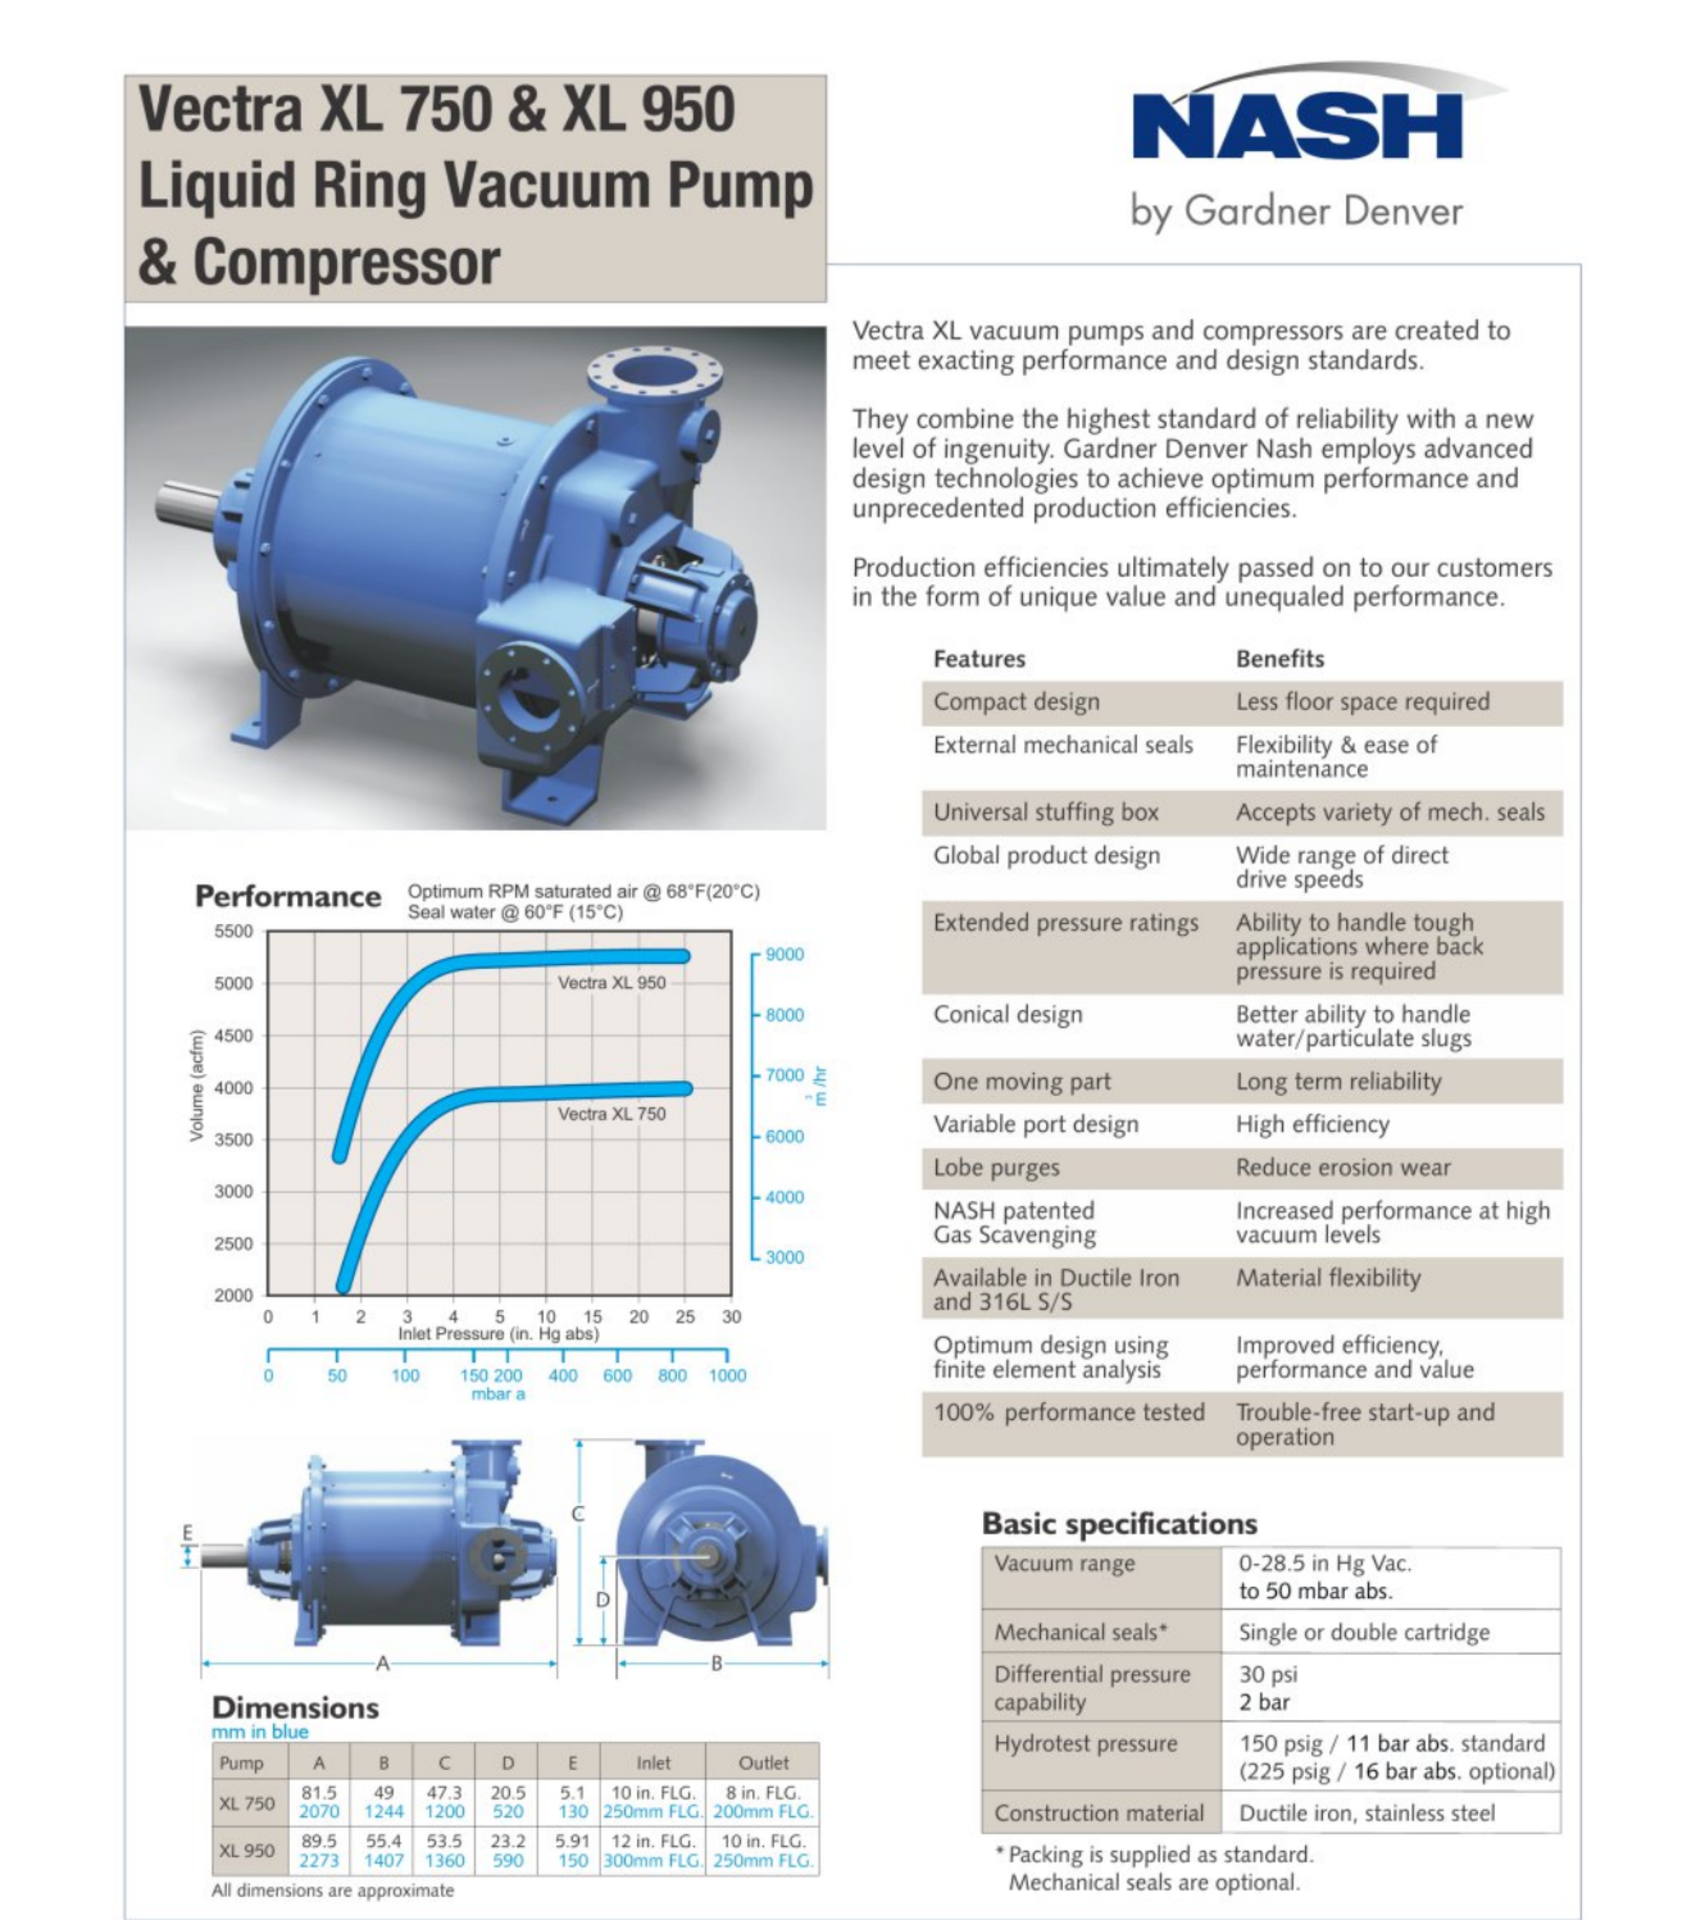 Nash 453VX9507K000 Vacuum Pump, Iron Casing, New Storeroom Spare